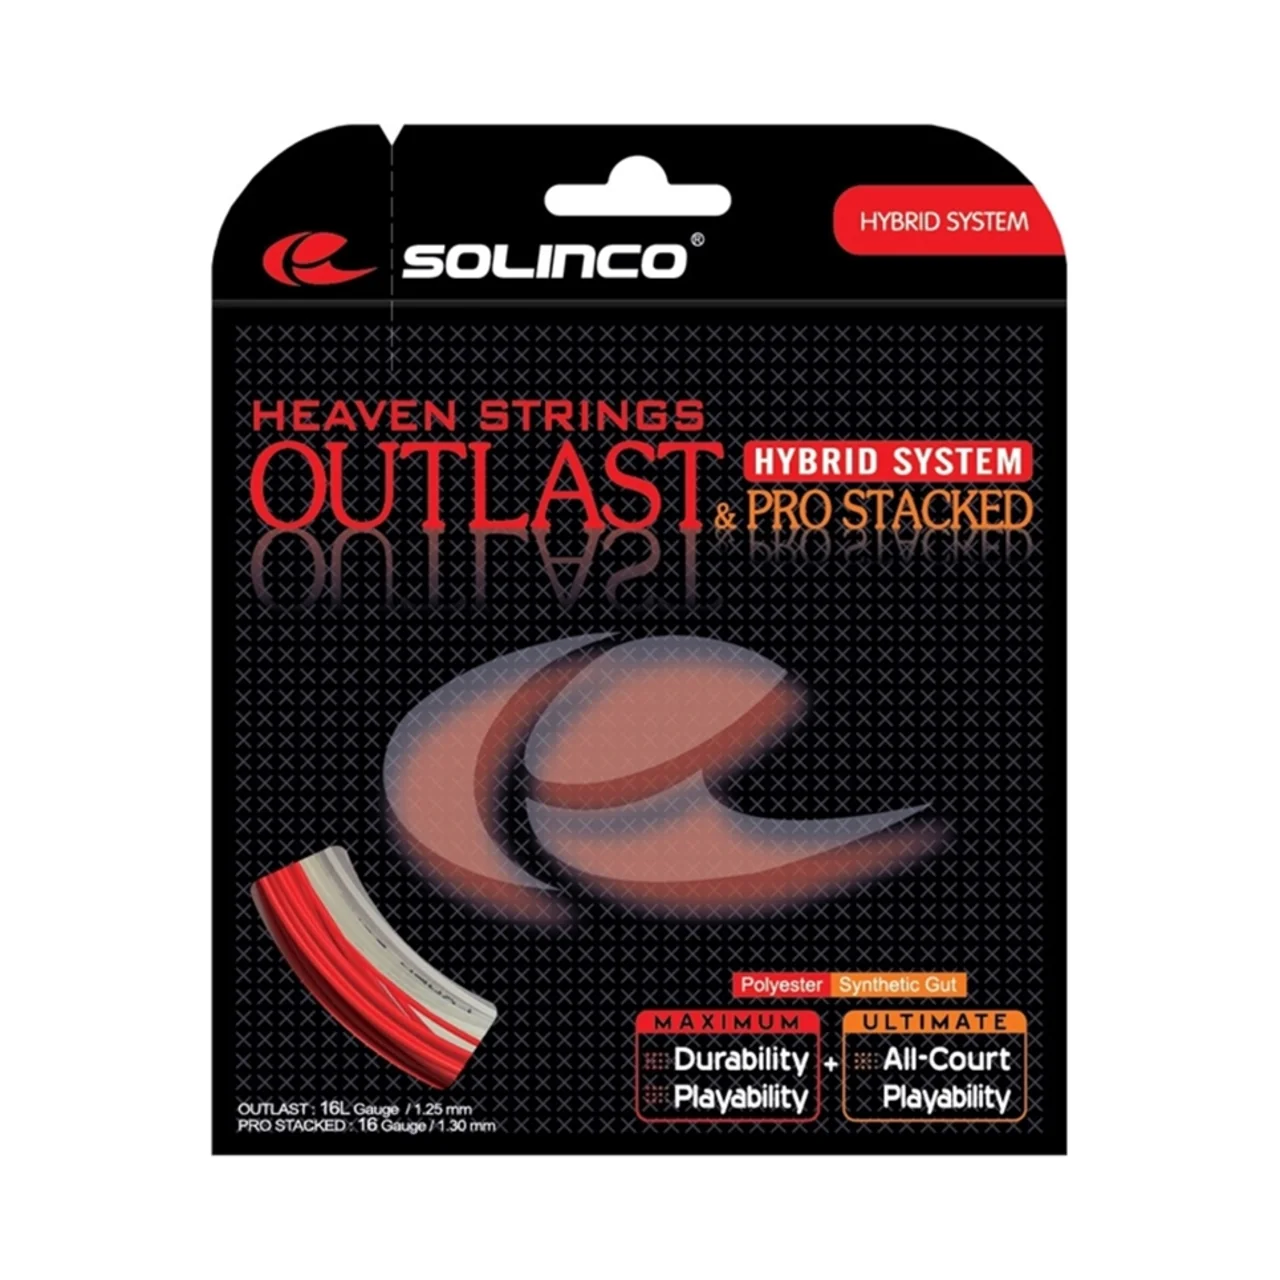 Solinco Hybrid Outlast/Pro Stacked Set